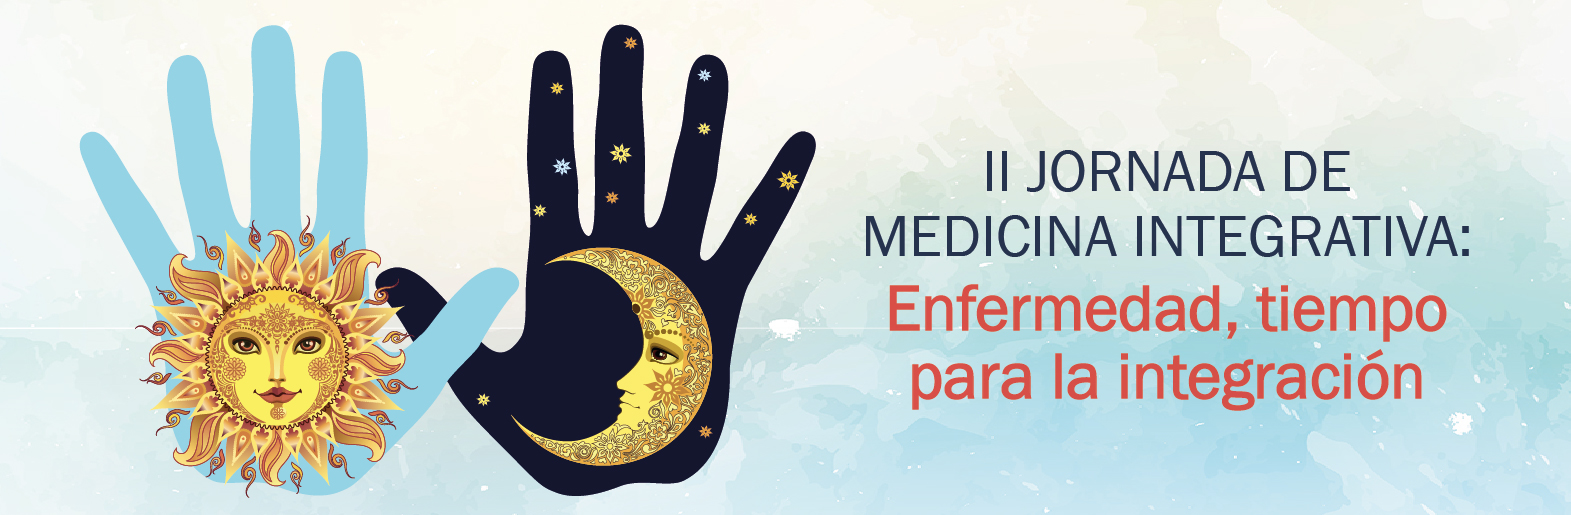 II Jornada de Medicina Integrativa - Fundación Cardioinfantil - Interna